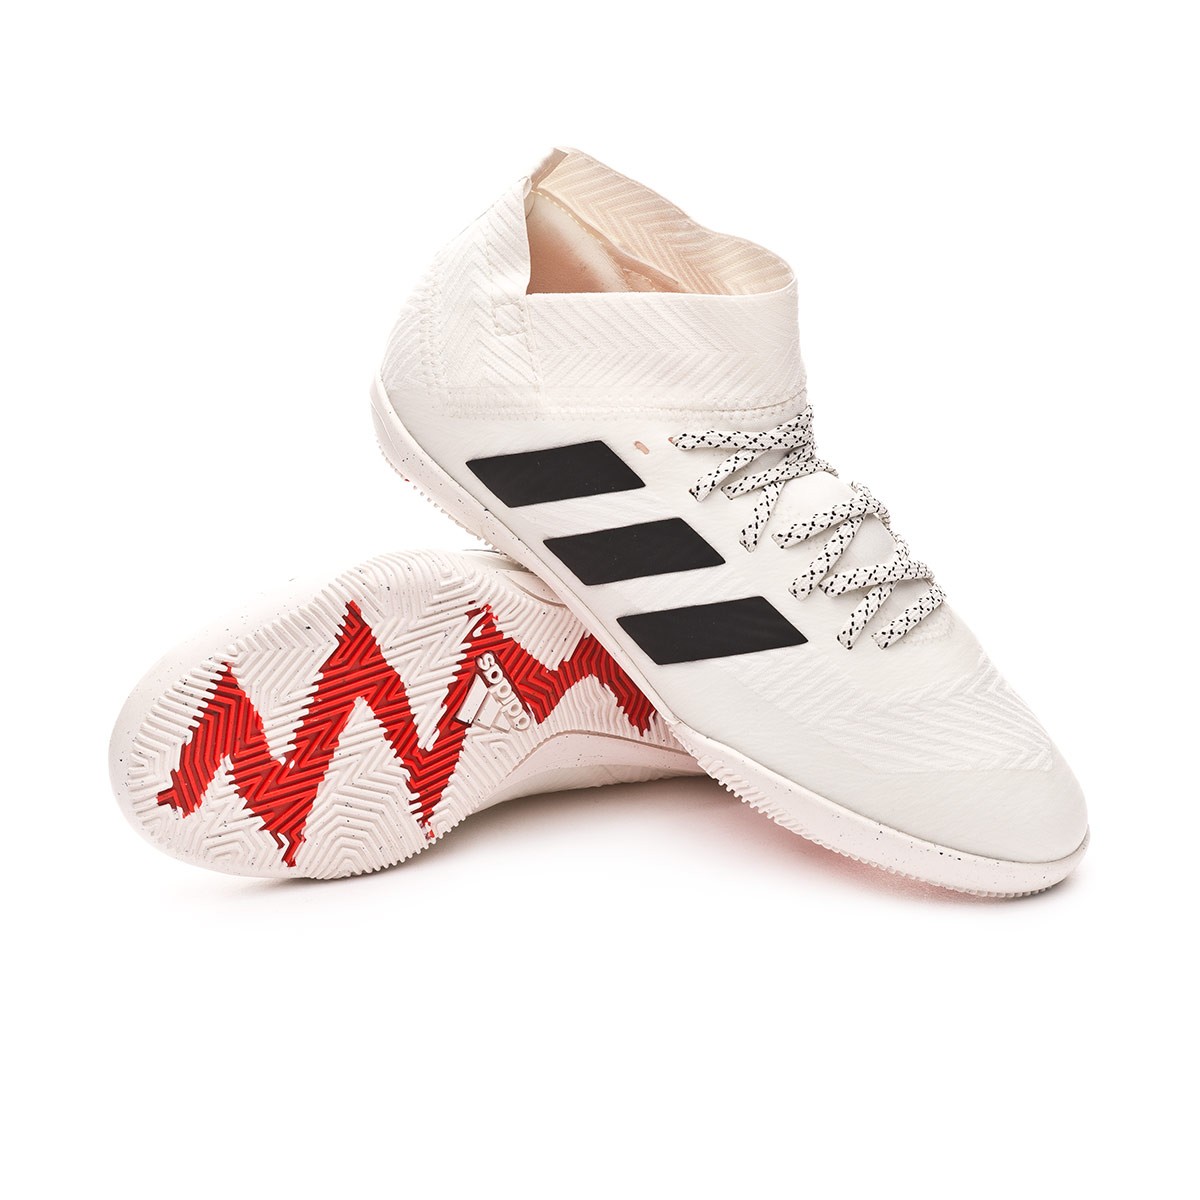 Zapatilla adidas Nemeziz Tango 18.3 IN Niño Off white-Core black-Active red  - Tienda de fútbol Fútbol Emotion